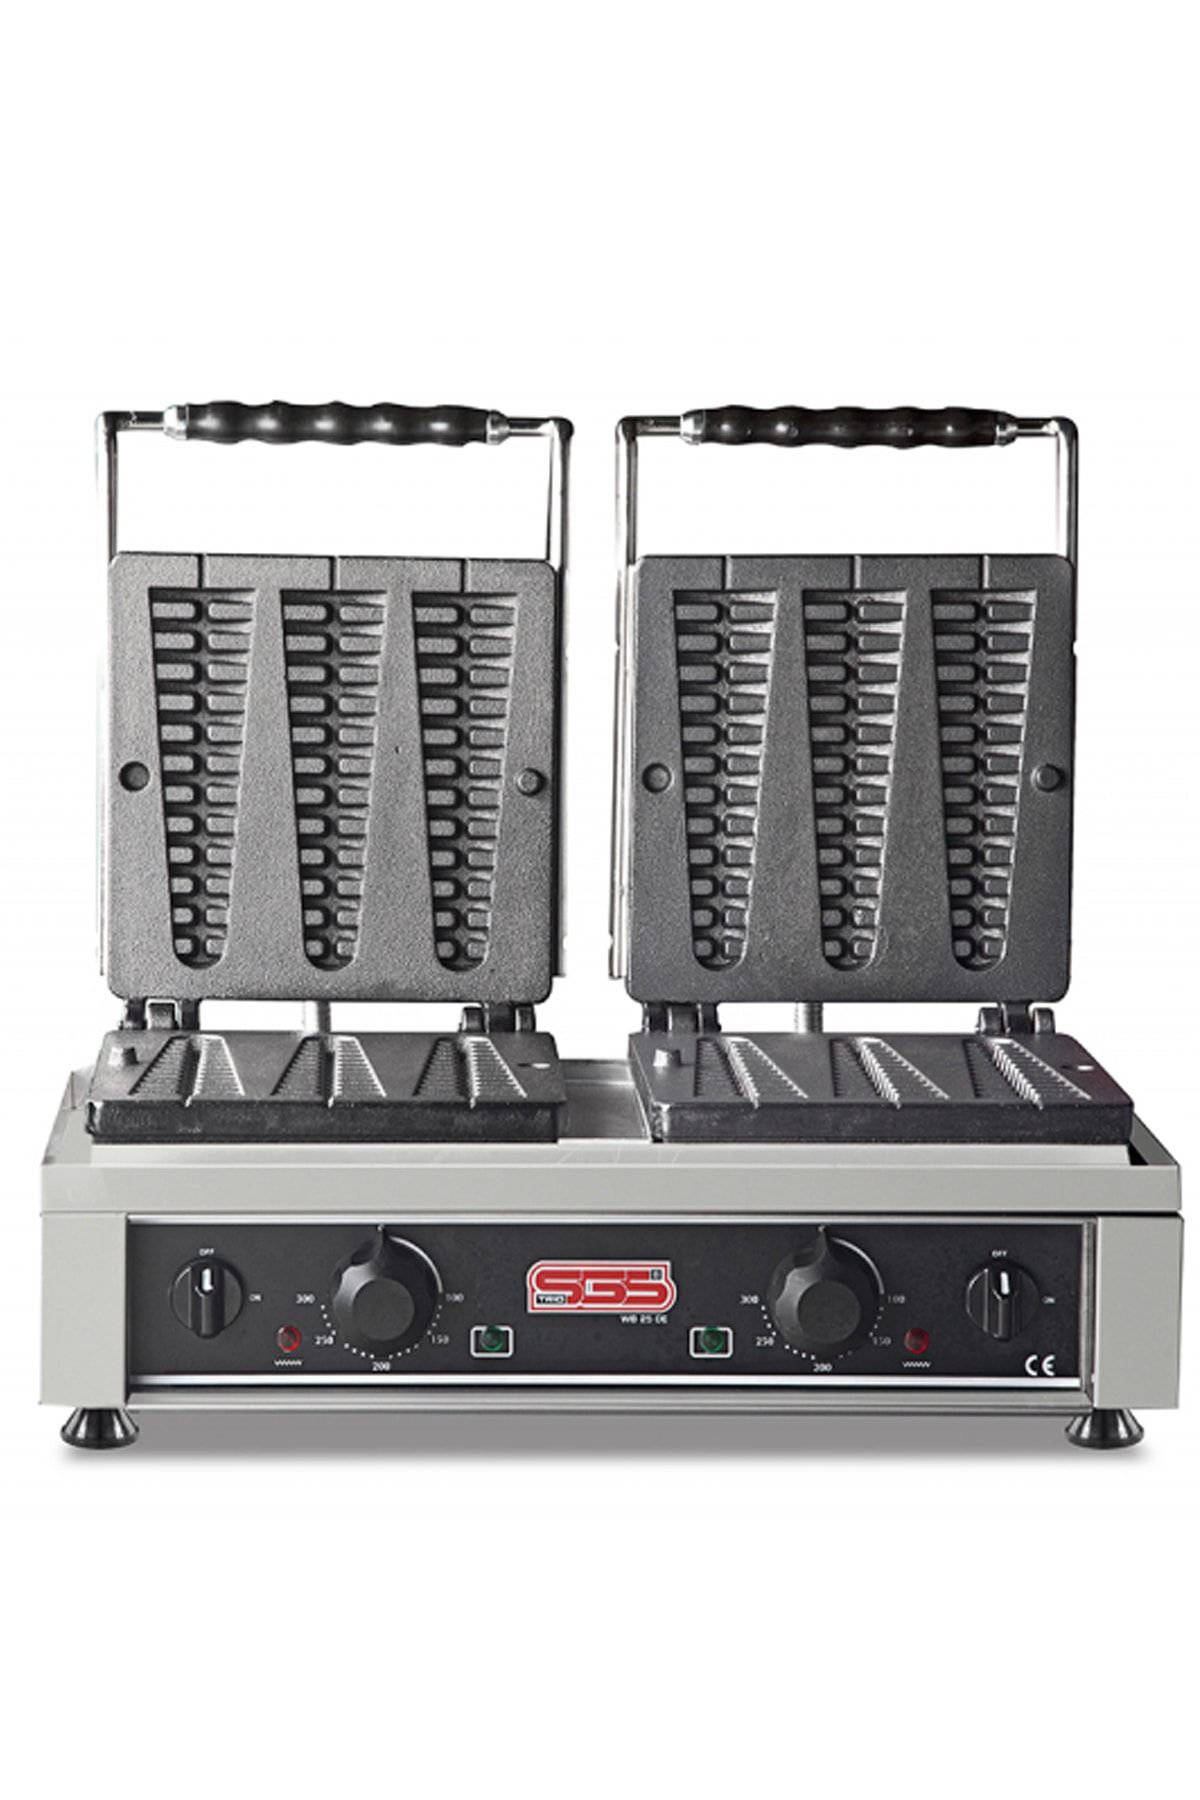 SGS OVEN Sgs Waffle Makinesi Wf 25 De Endüstriyel Profesyonel